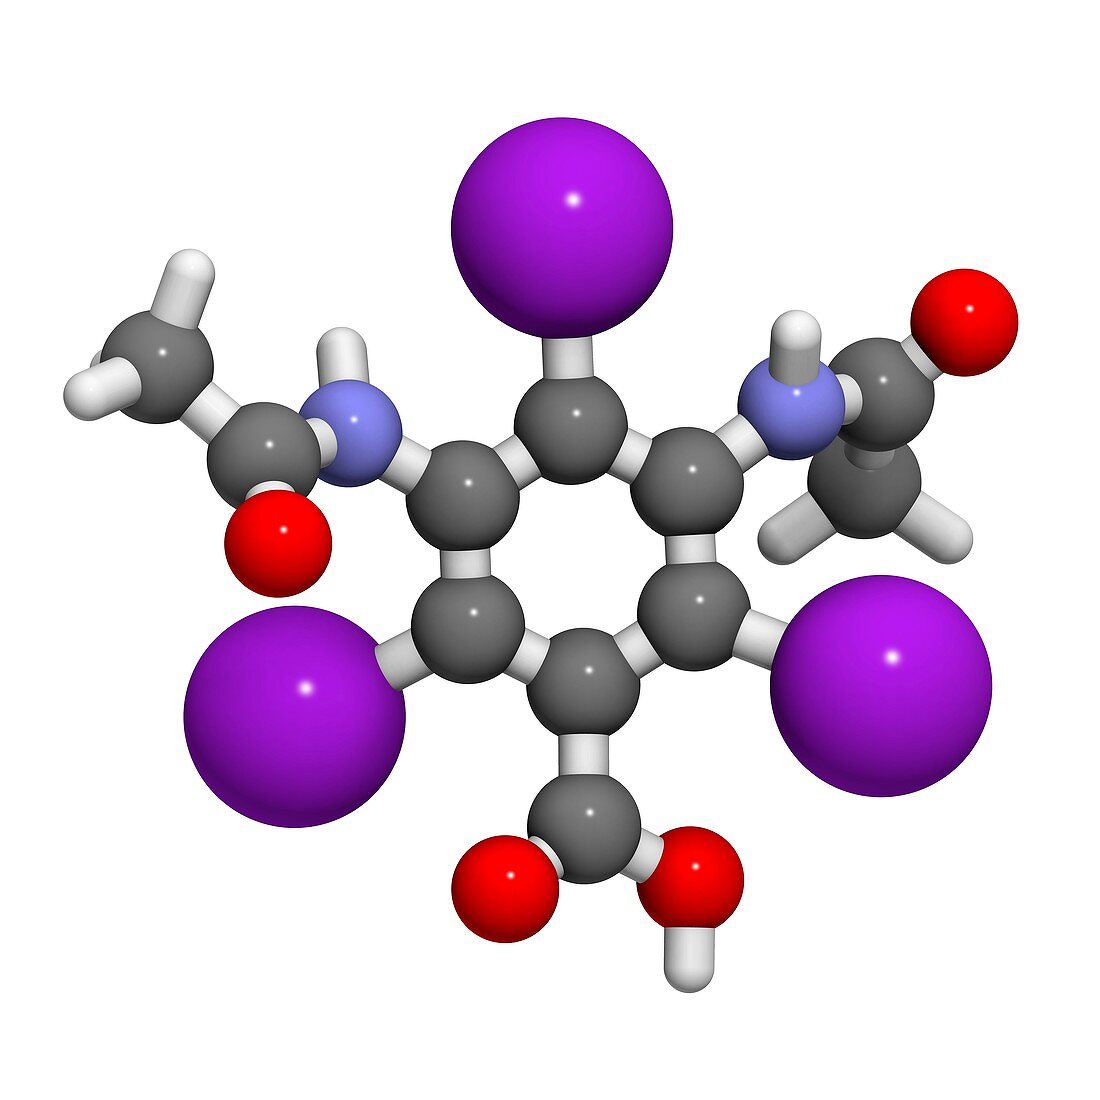 Diatrizoic acid contrast agent molecule